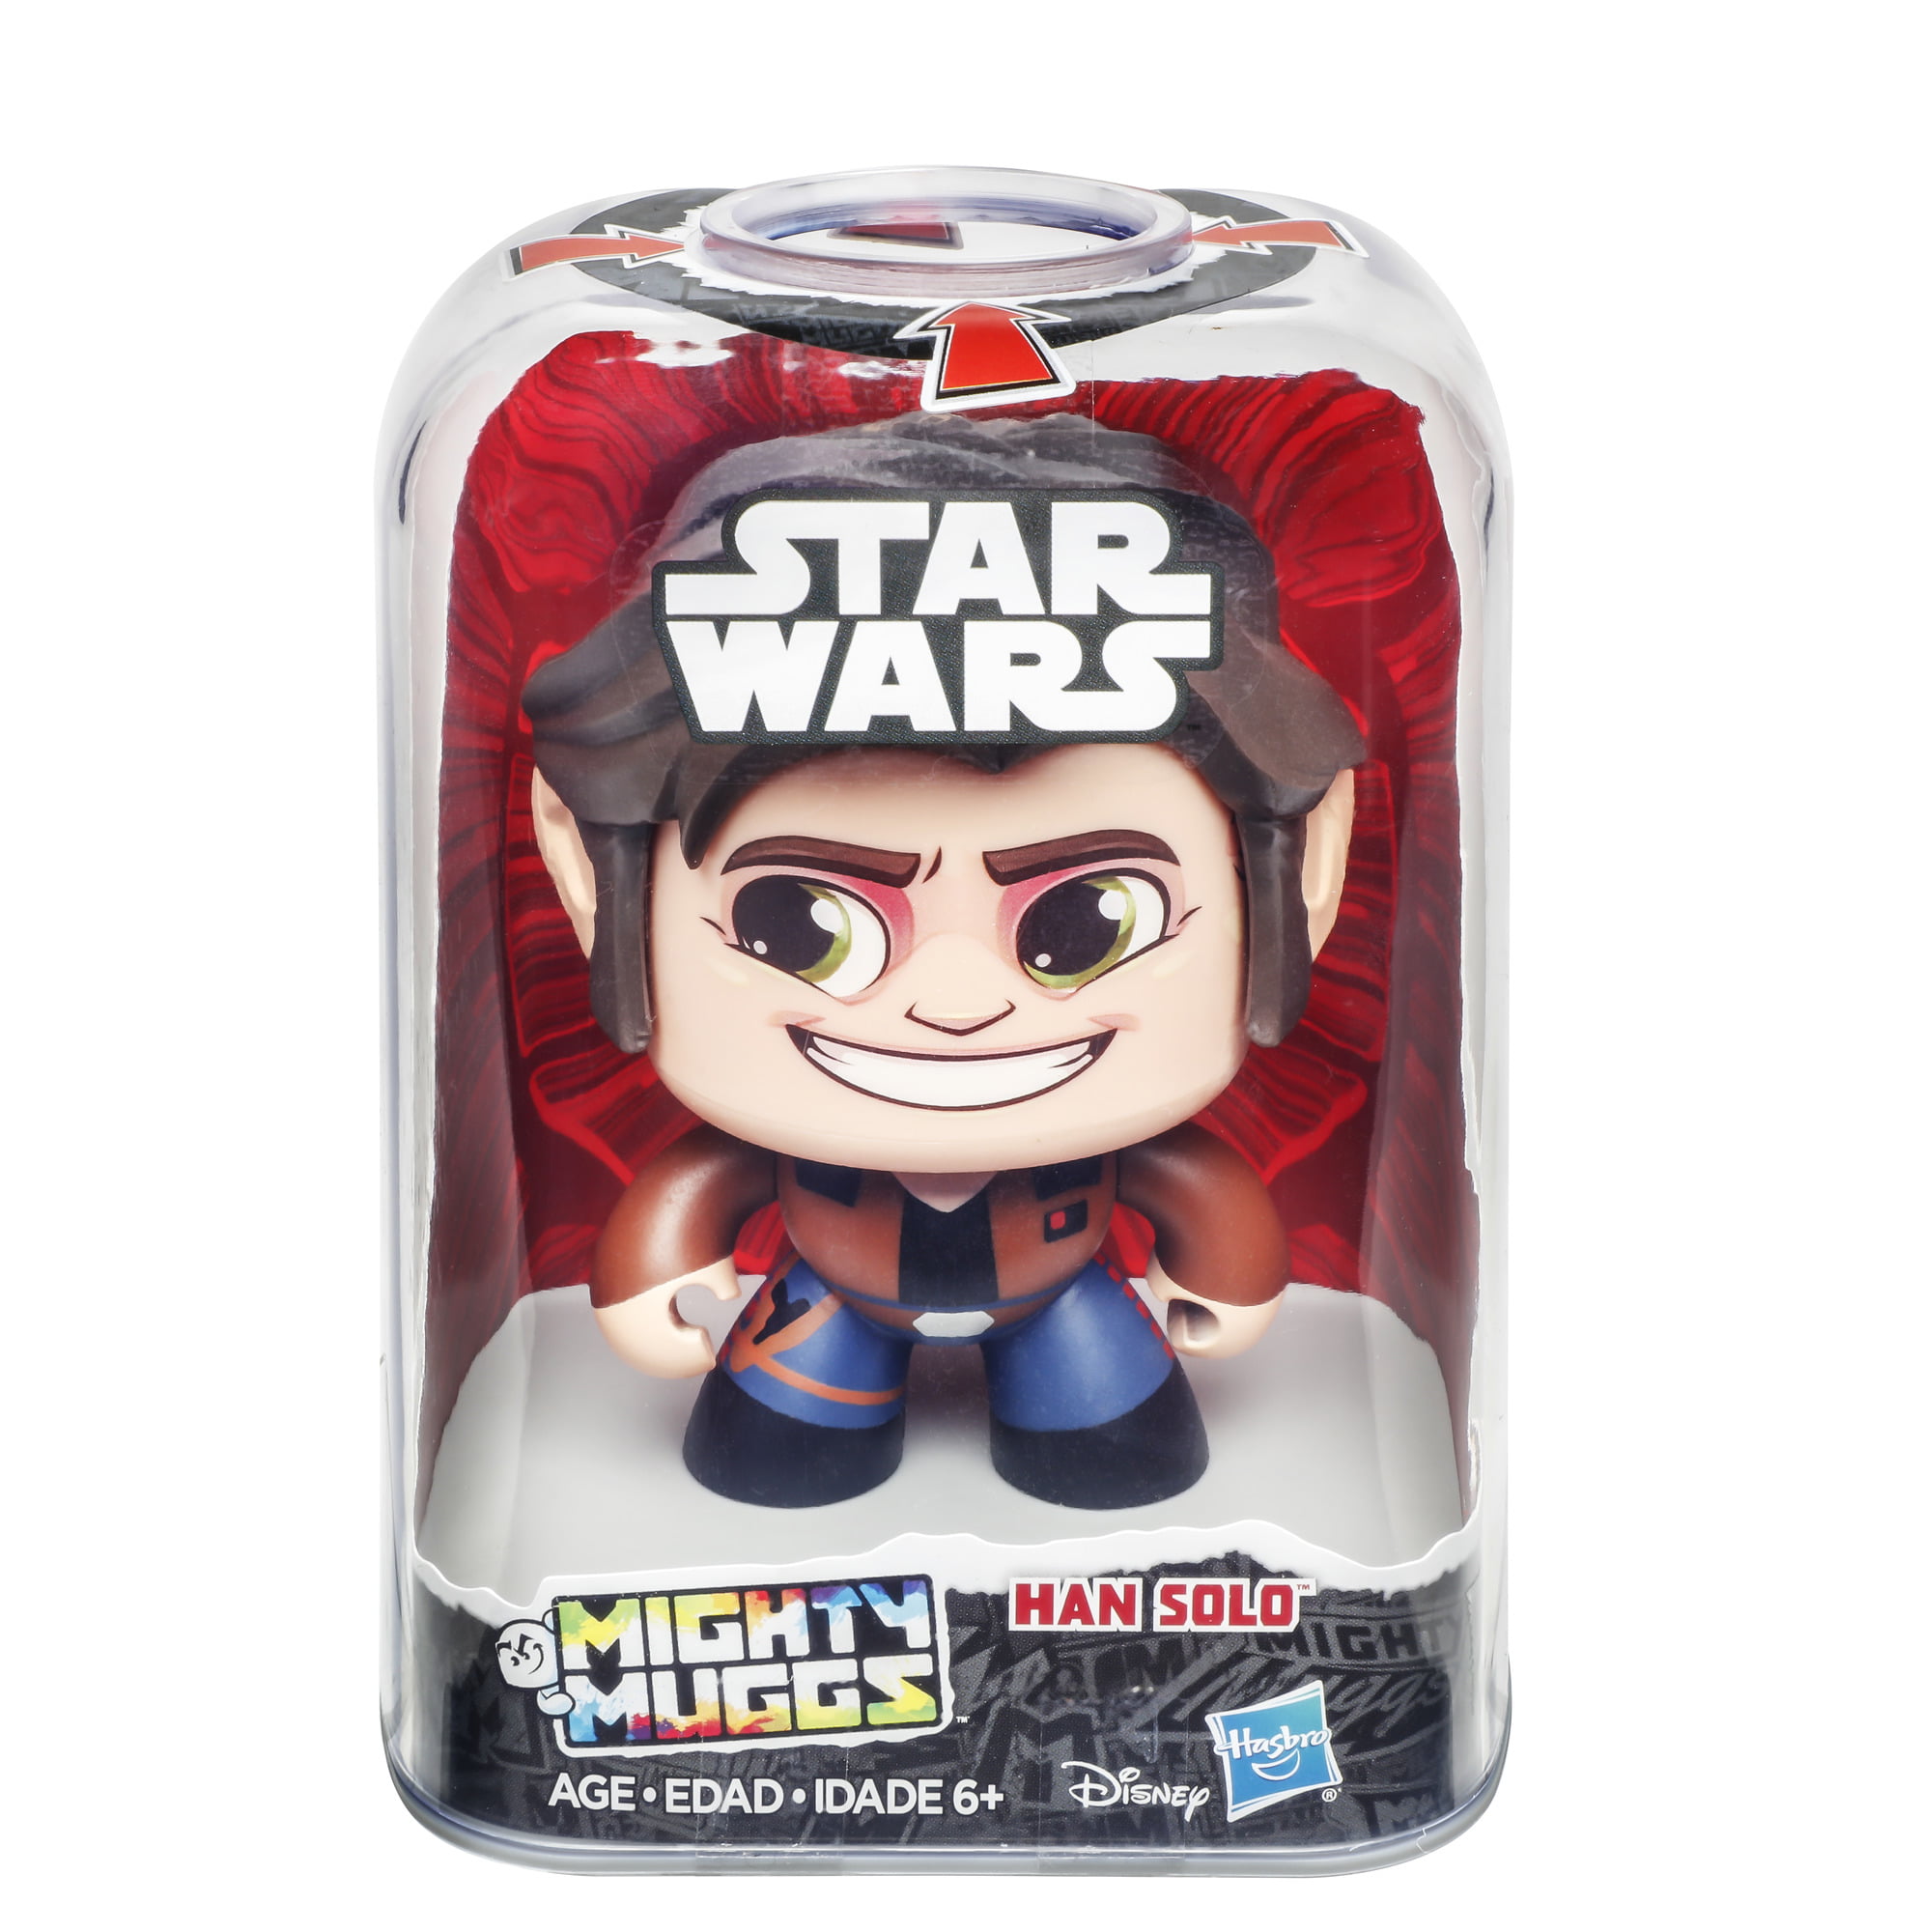 Star Wars Mighty Muggs Han Solo #10 Action Figure